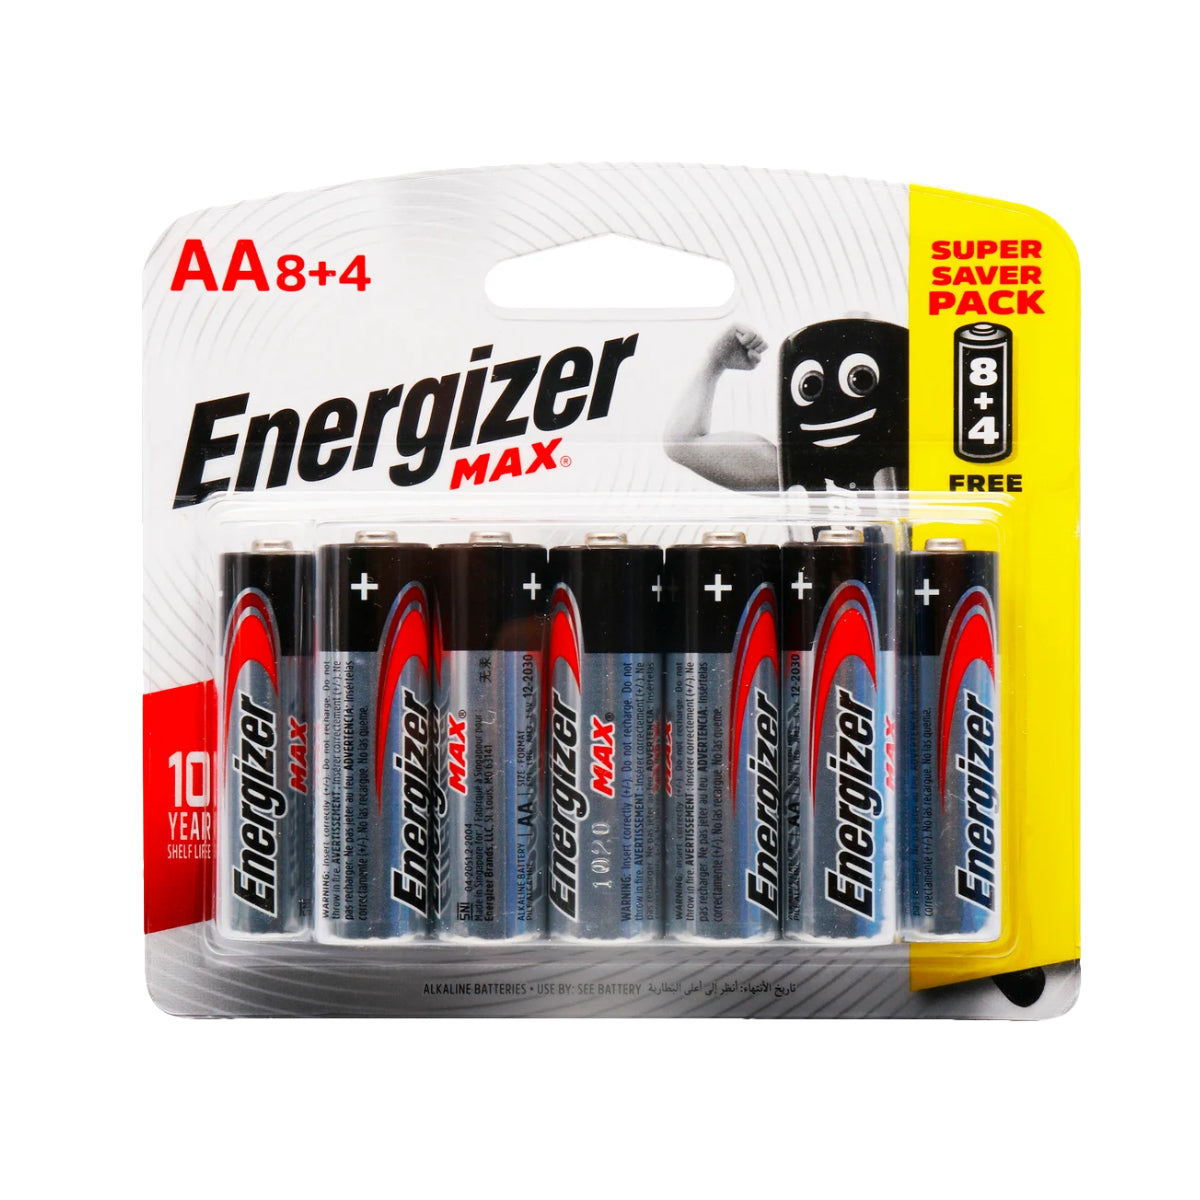 Energizer Alkaline Battery AA 8+4/pack